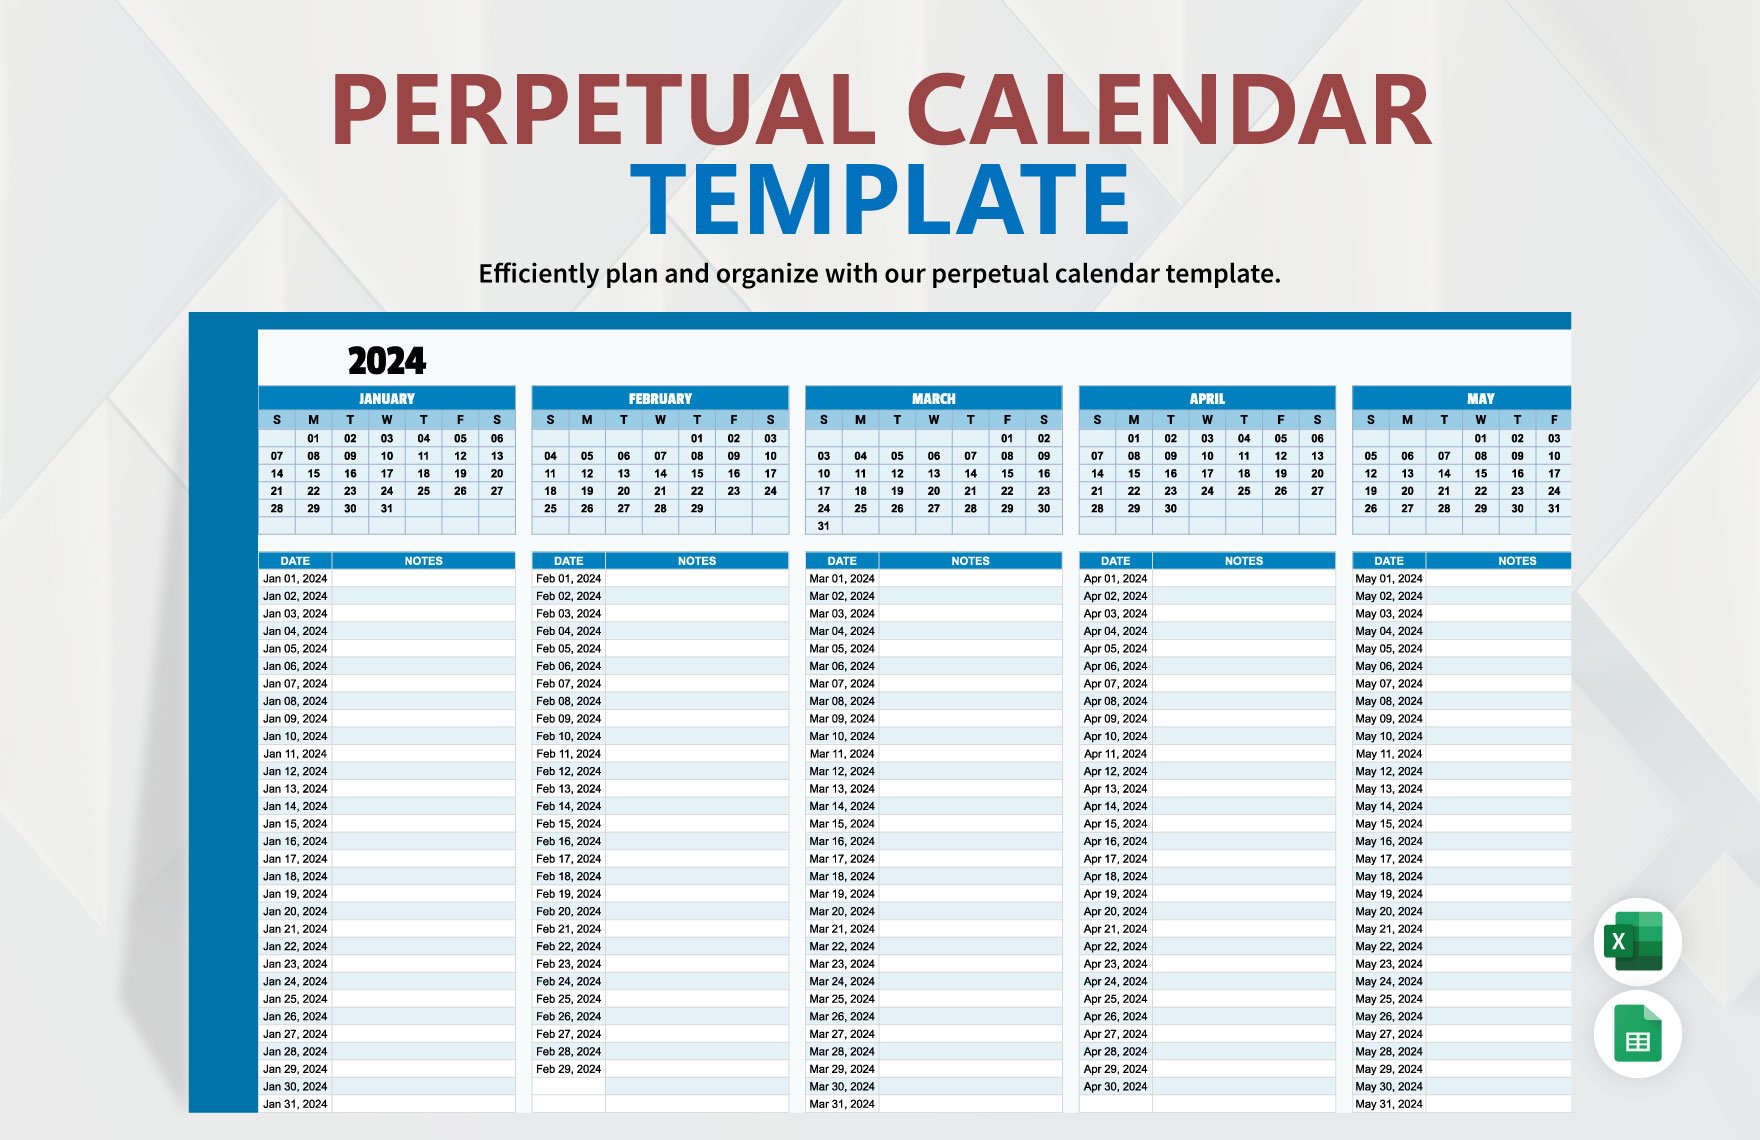 Perpetual Calendar Template in Excel, Google Sheets